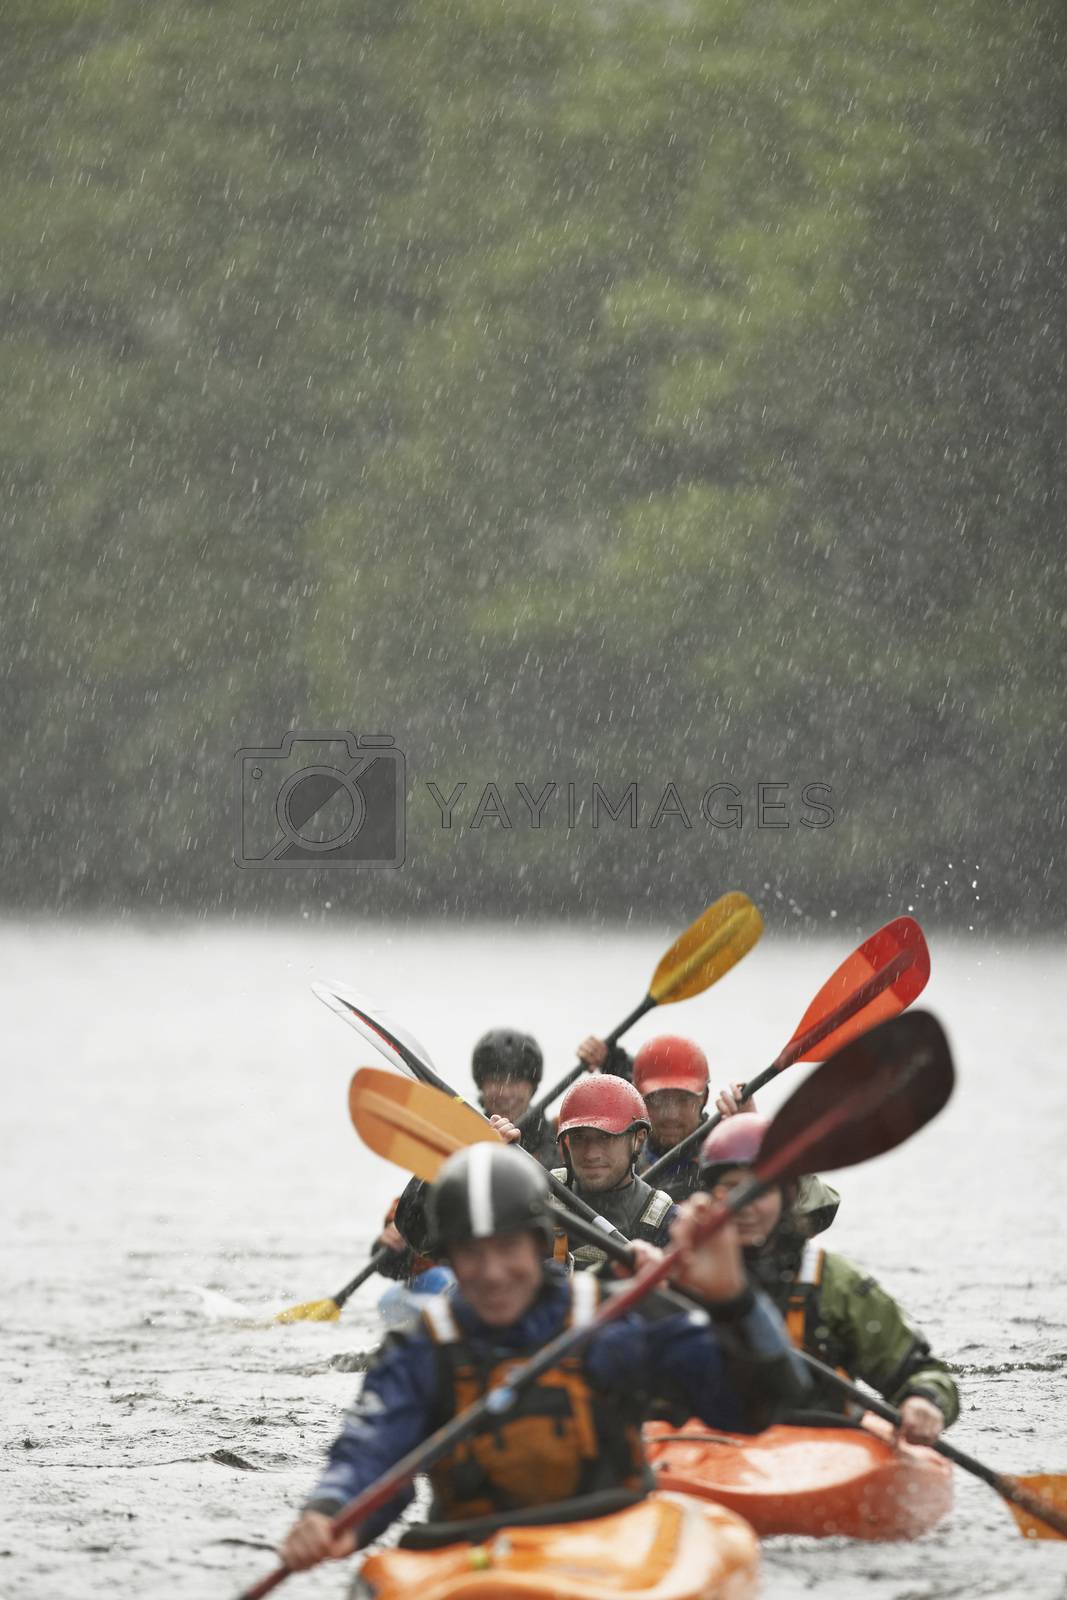 Groupof people kayaking in river